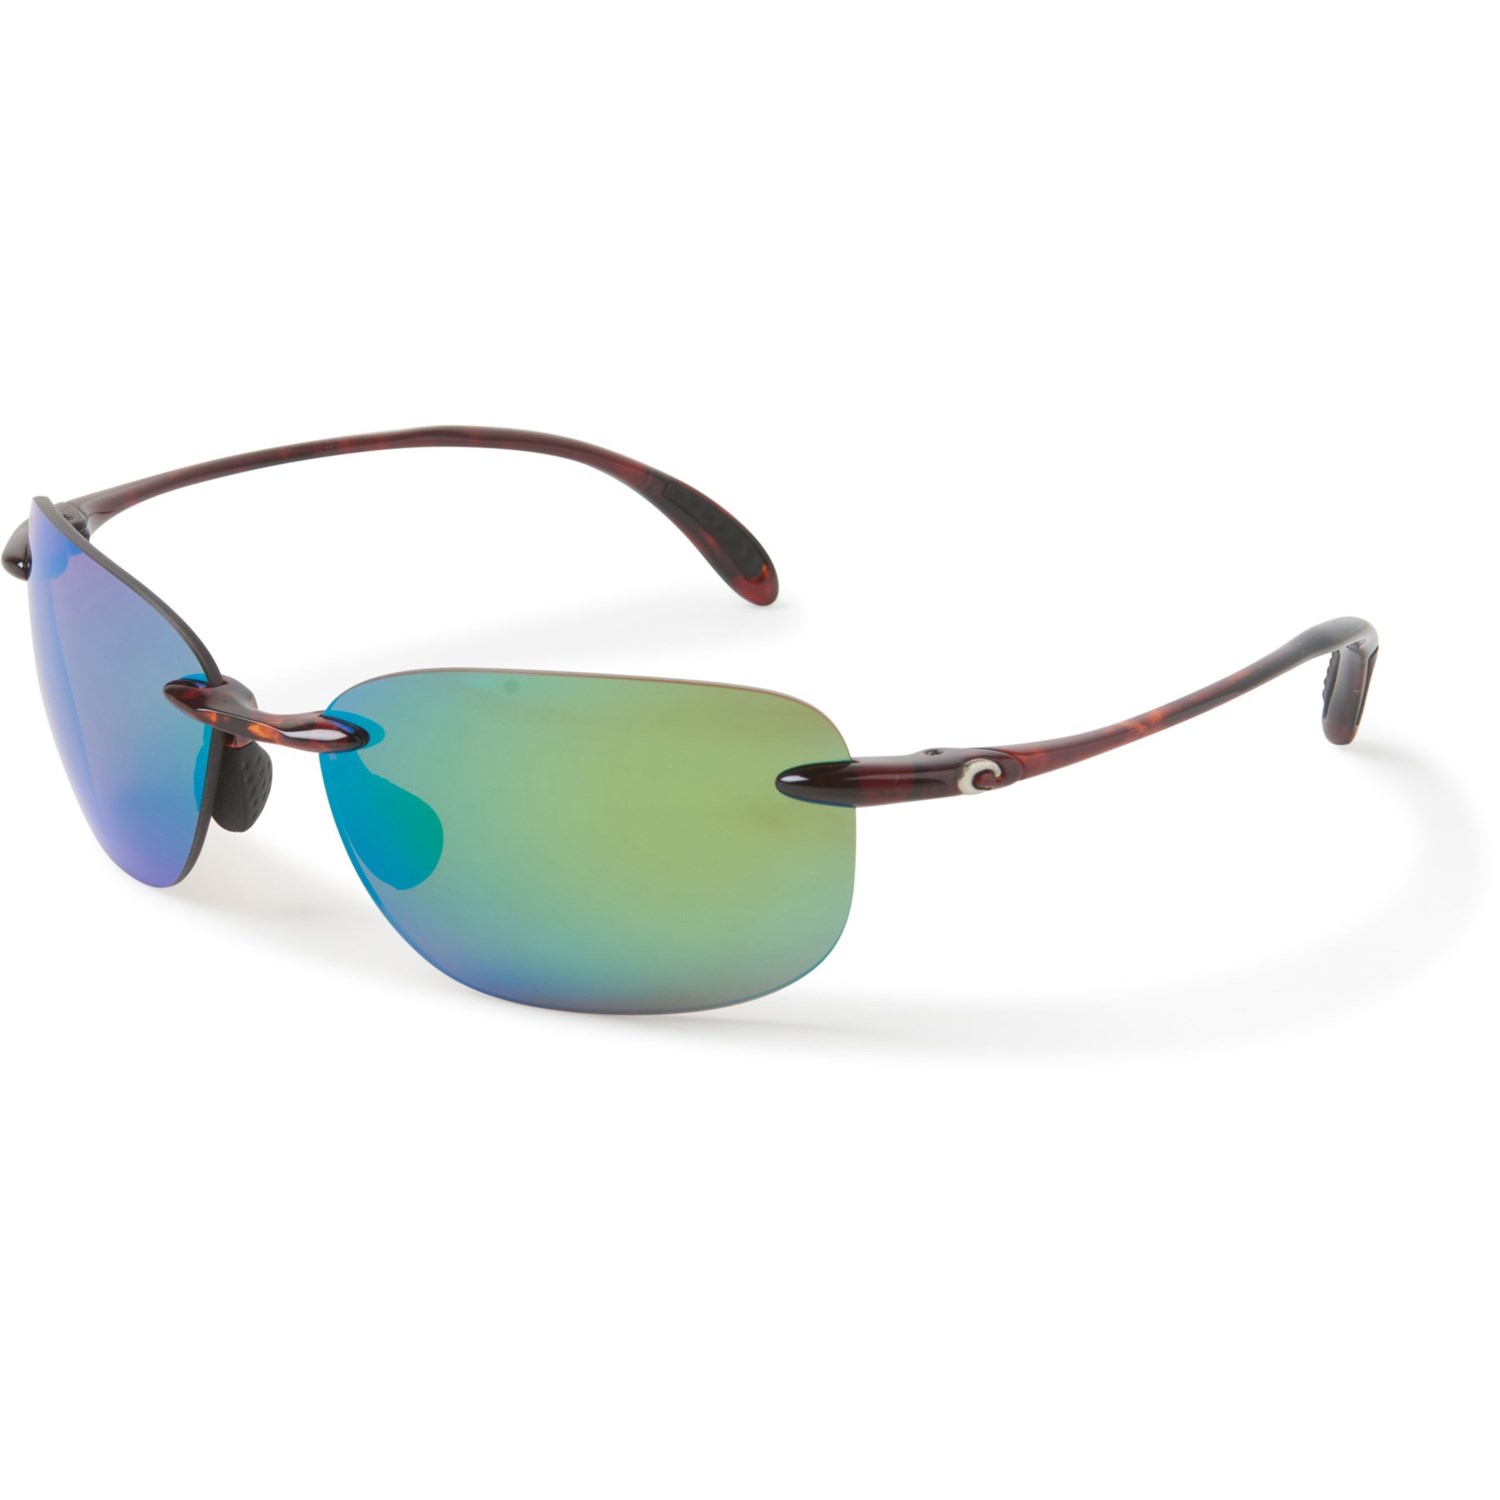 https://i.stpost.com/costa-seagrove-sunglasses-polarized-580p-mirror-lenses-for-men-and-women-in-green-mirror~p~3anvw_01~1500.2.jpg